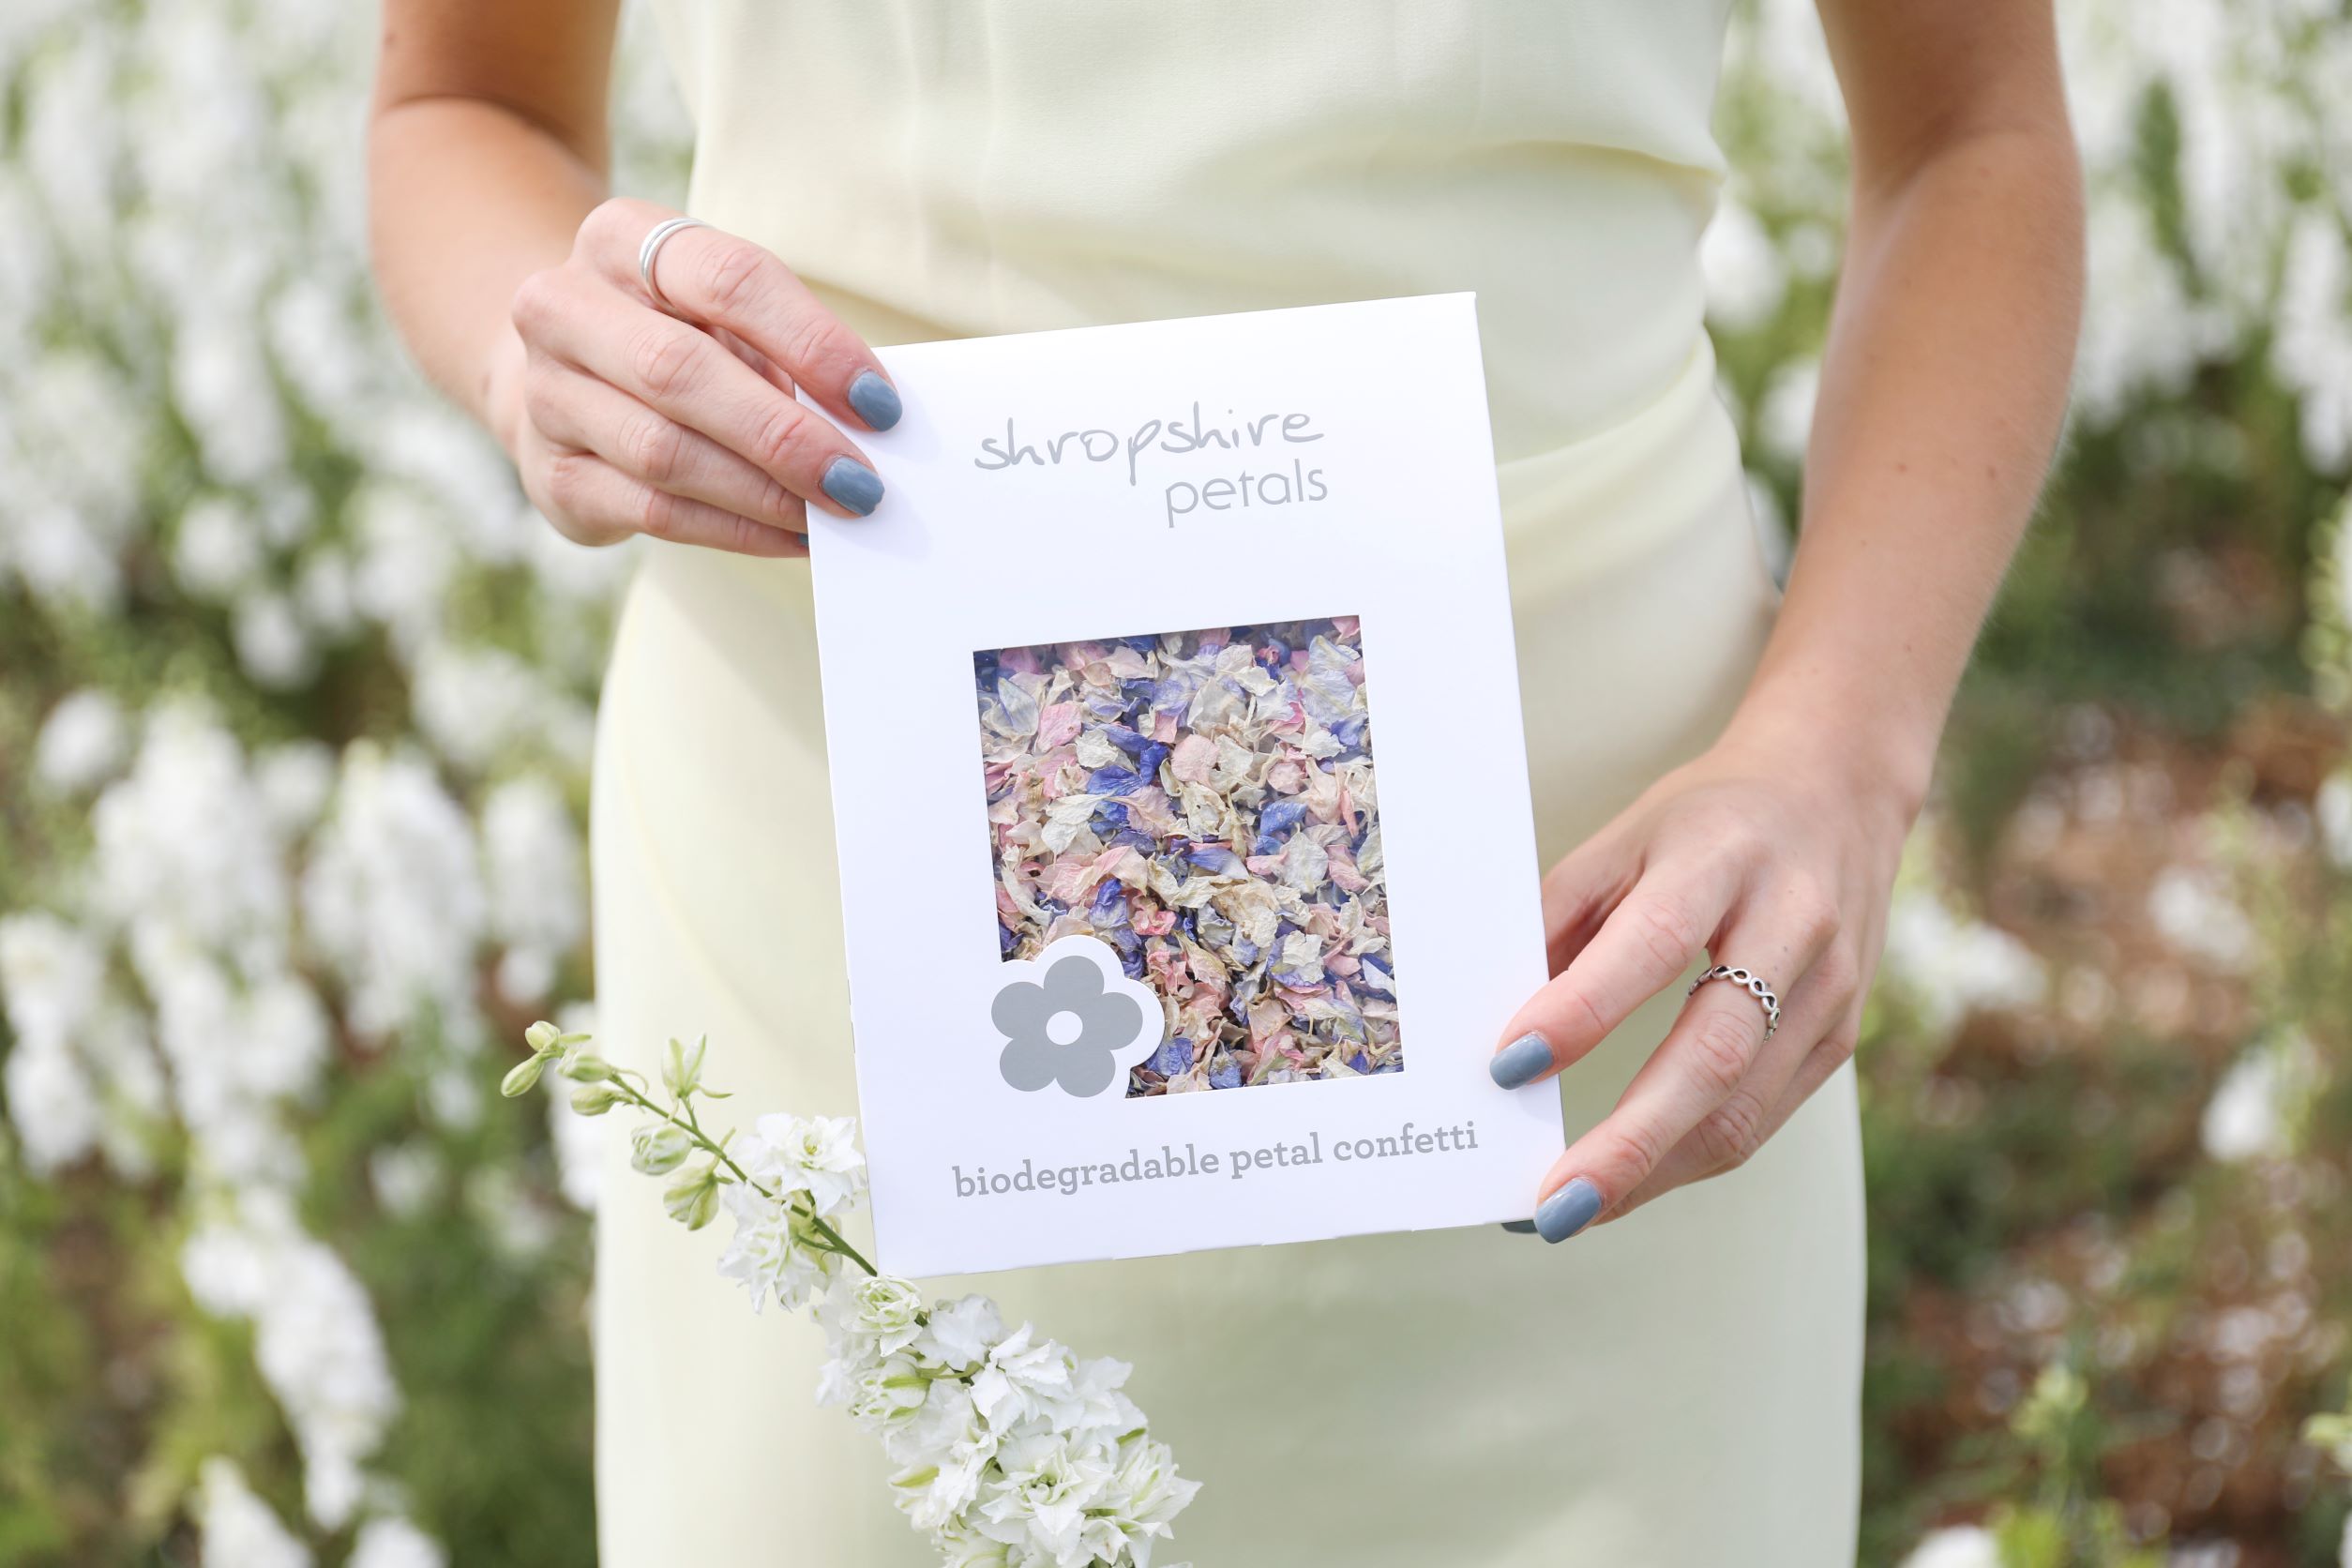 shropshire-flowers-wedding-confetti